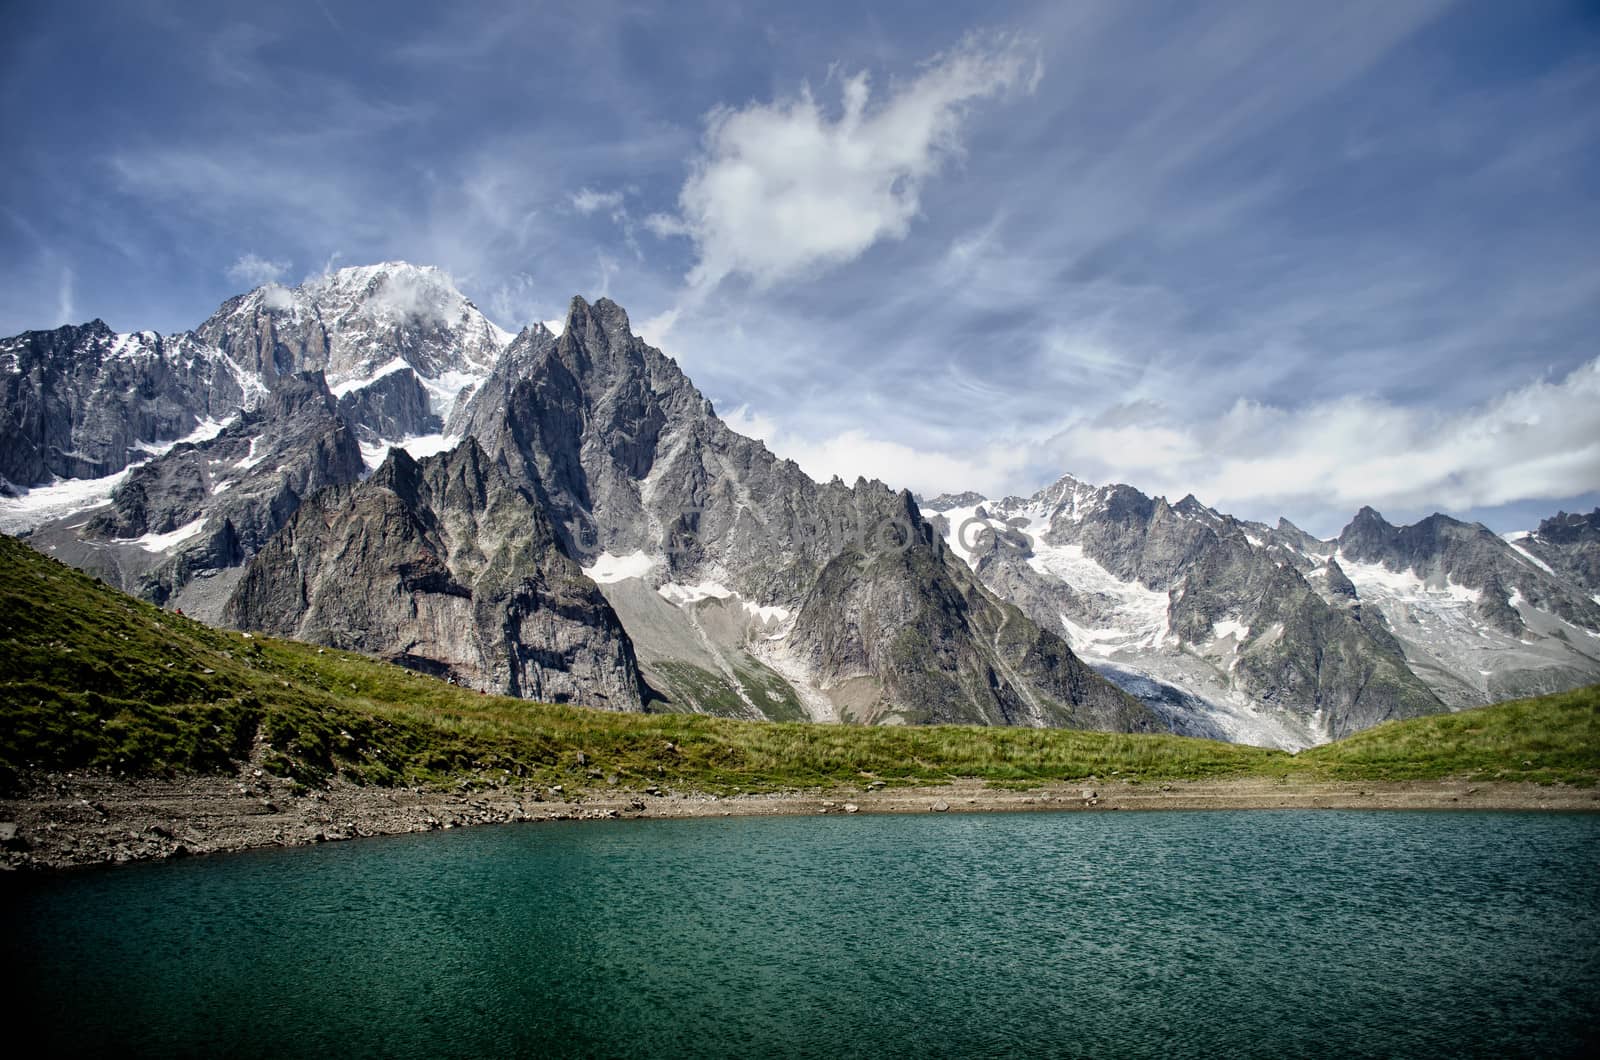 Alpine lake and mountain range by artofphoto